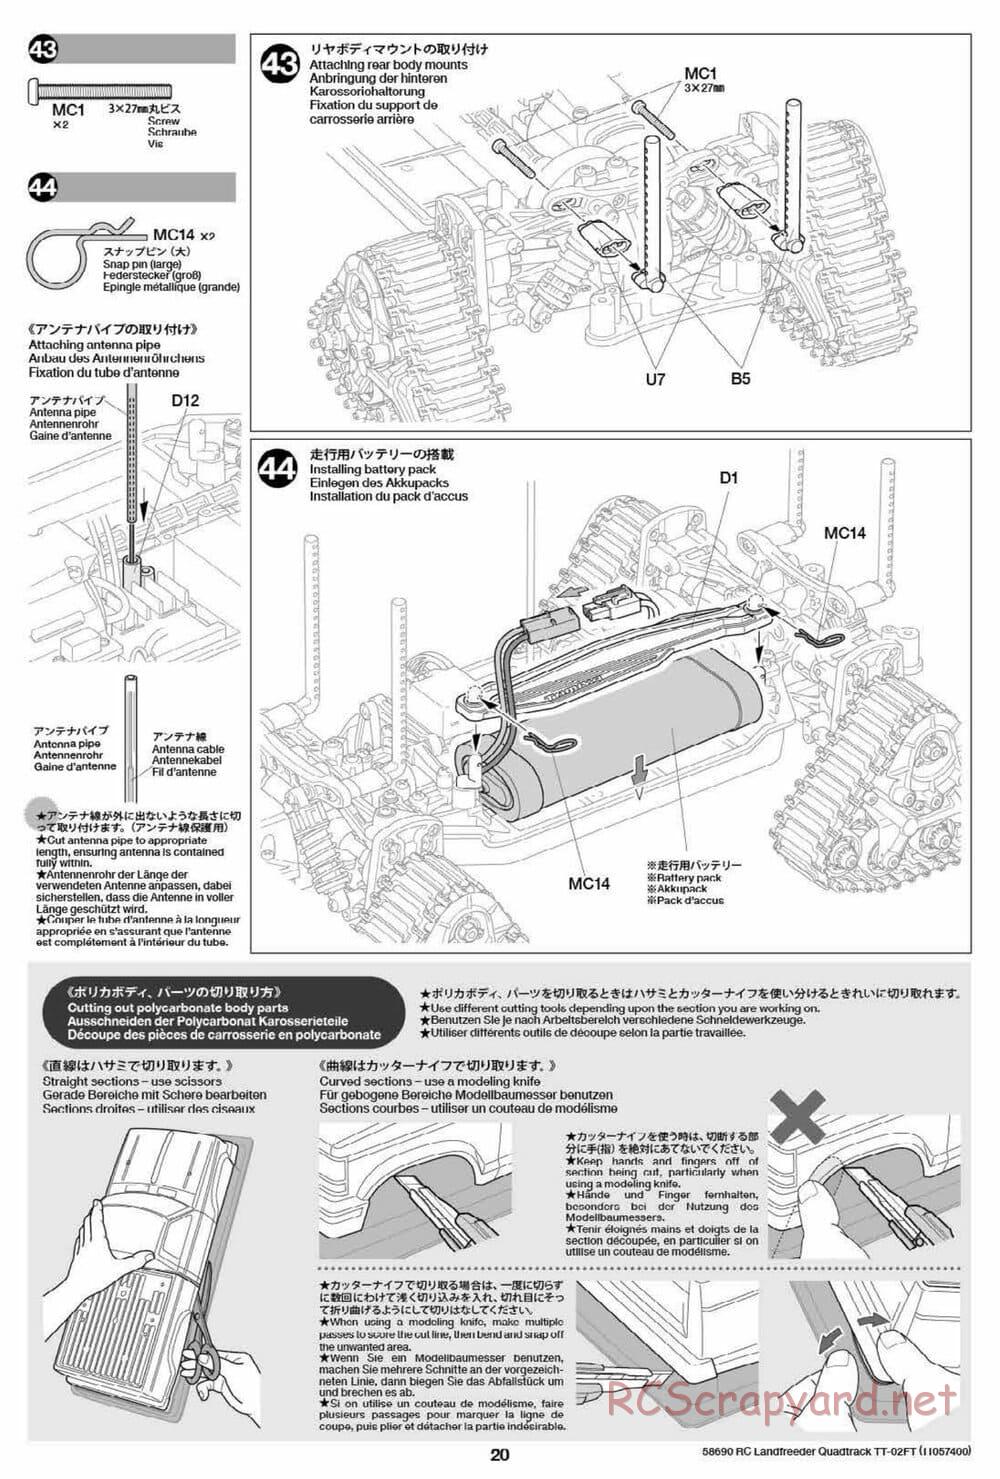 Tamiya - Landfreeder Quadtrack - TT-02FT Chassis - Manual - Page 20